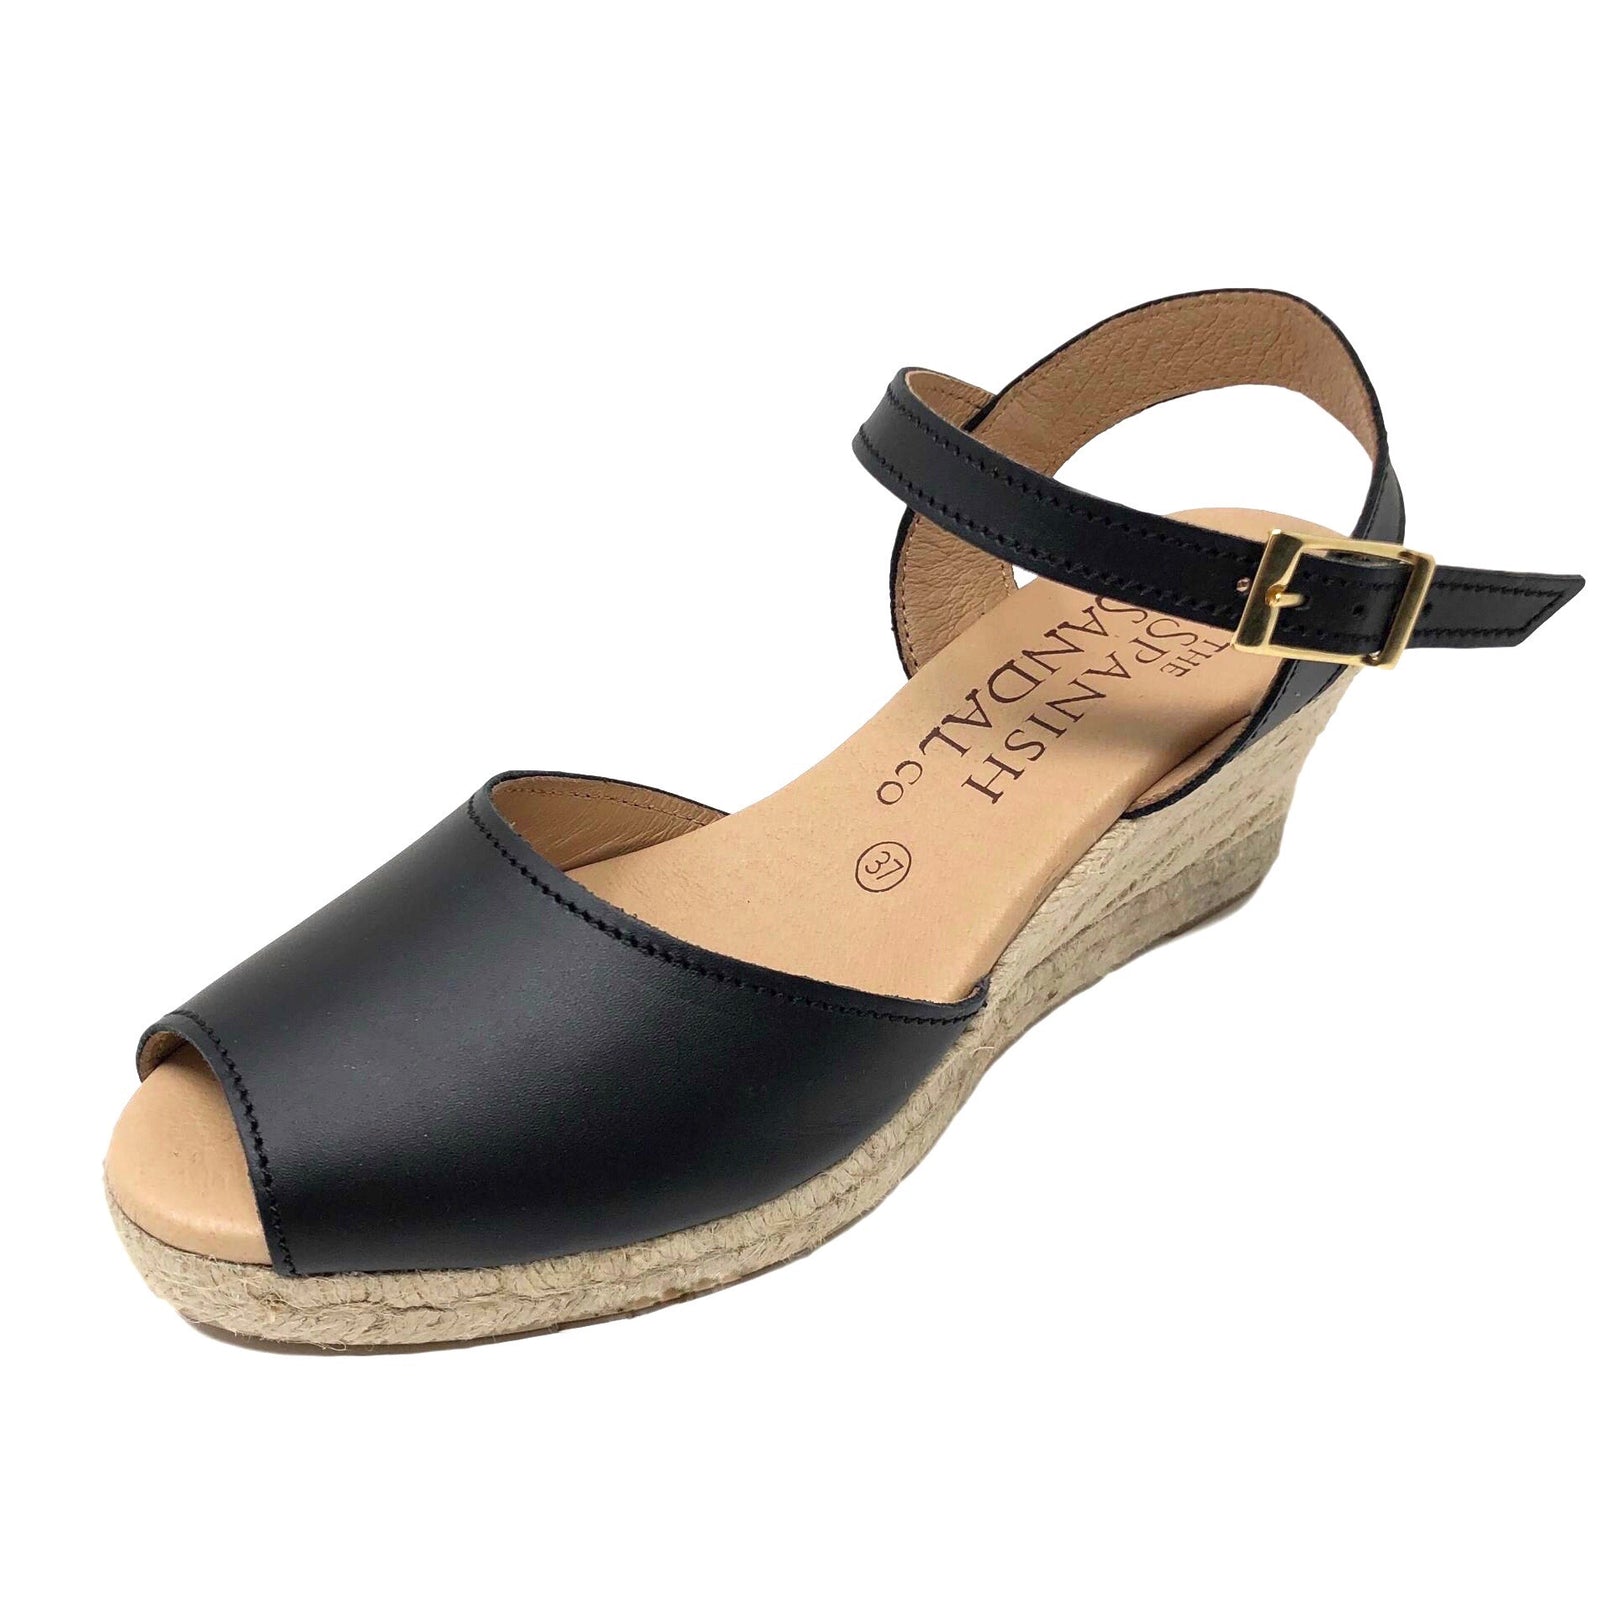 Black cork wedge sandals with strap 